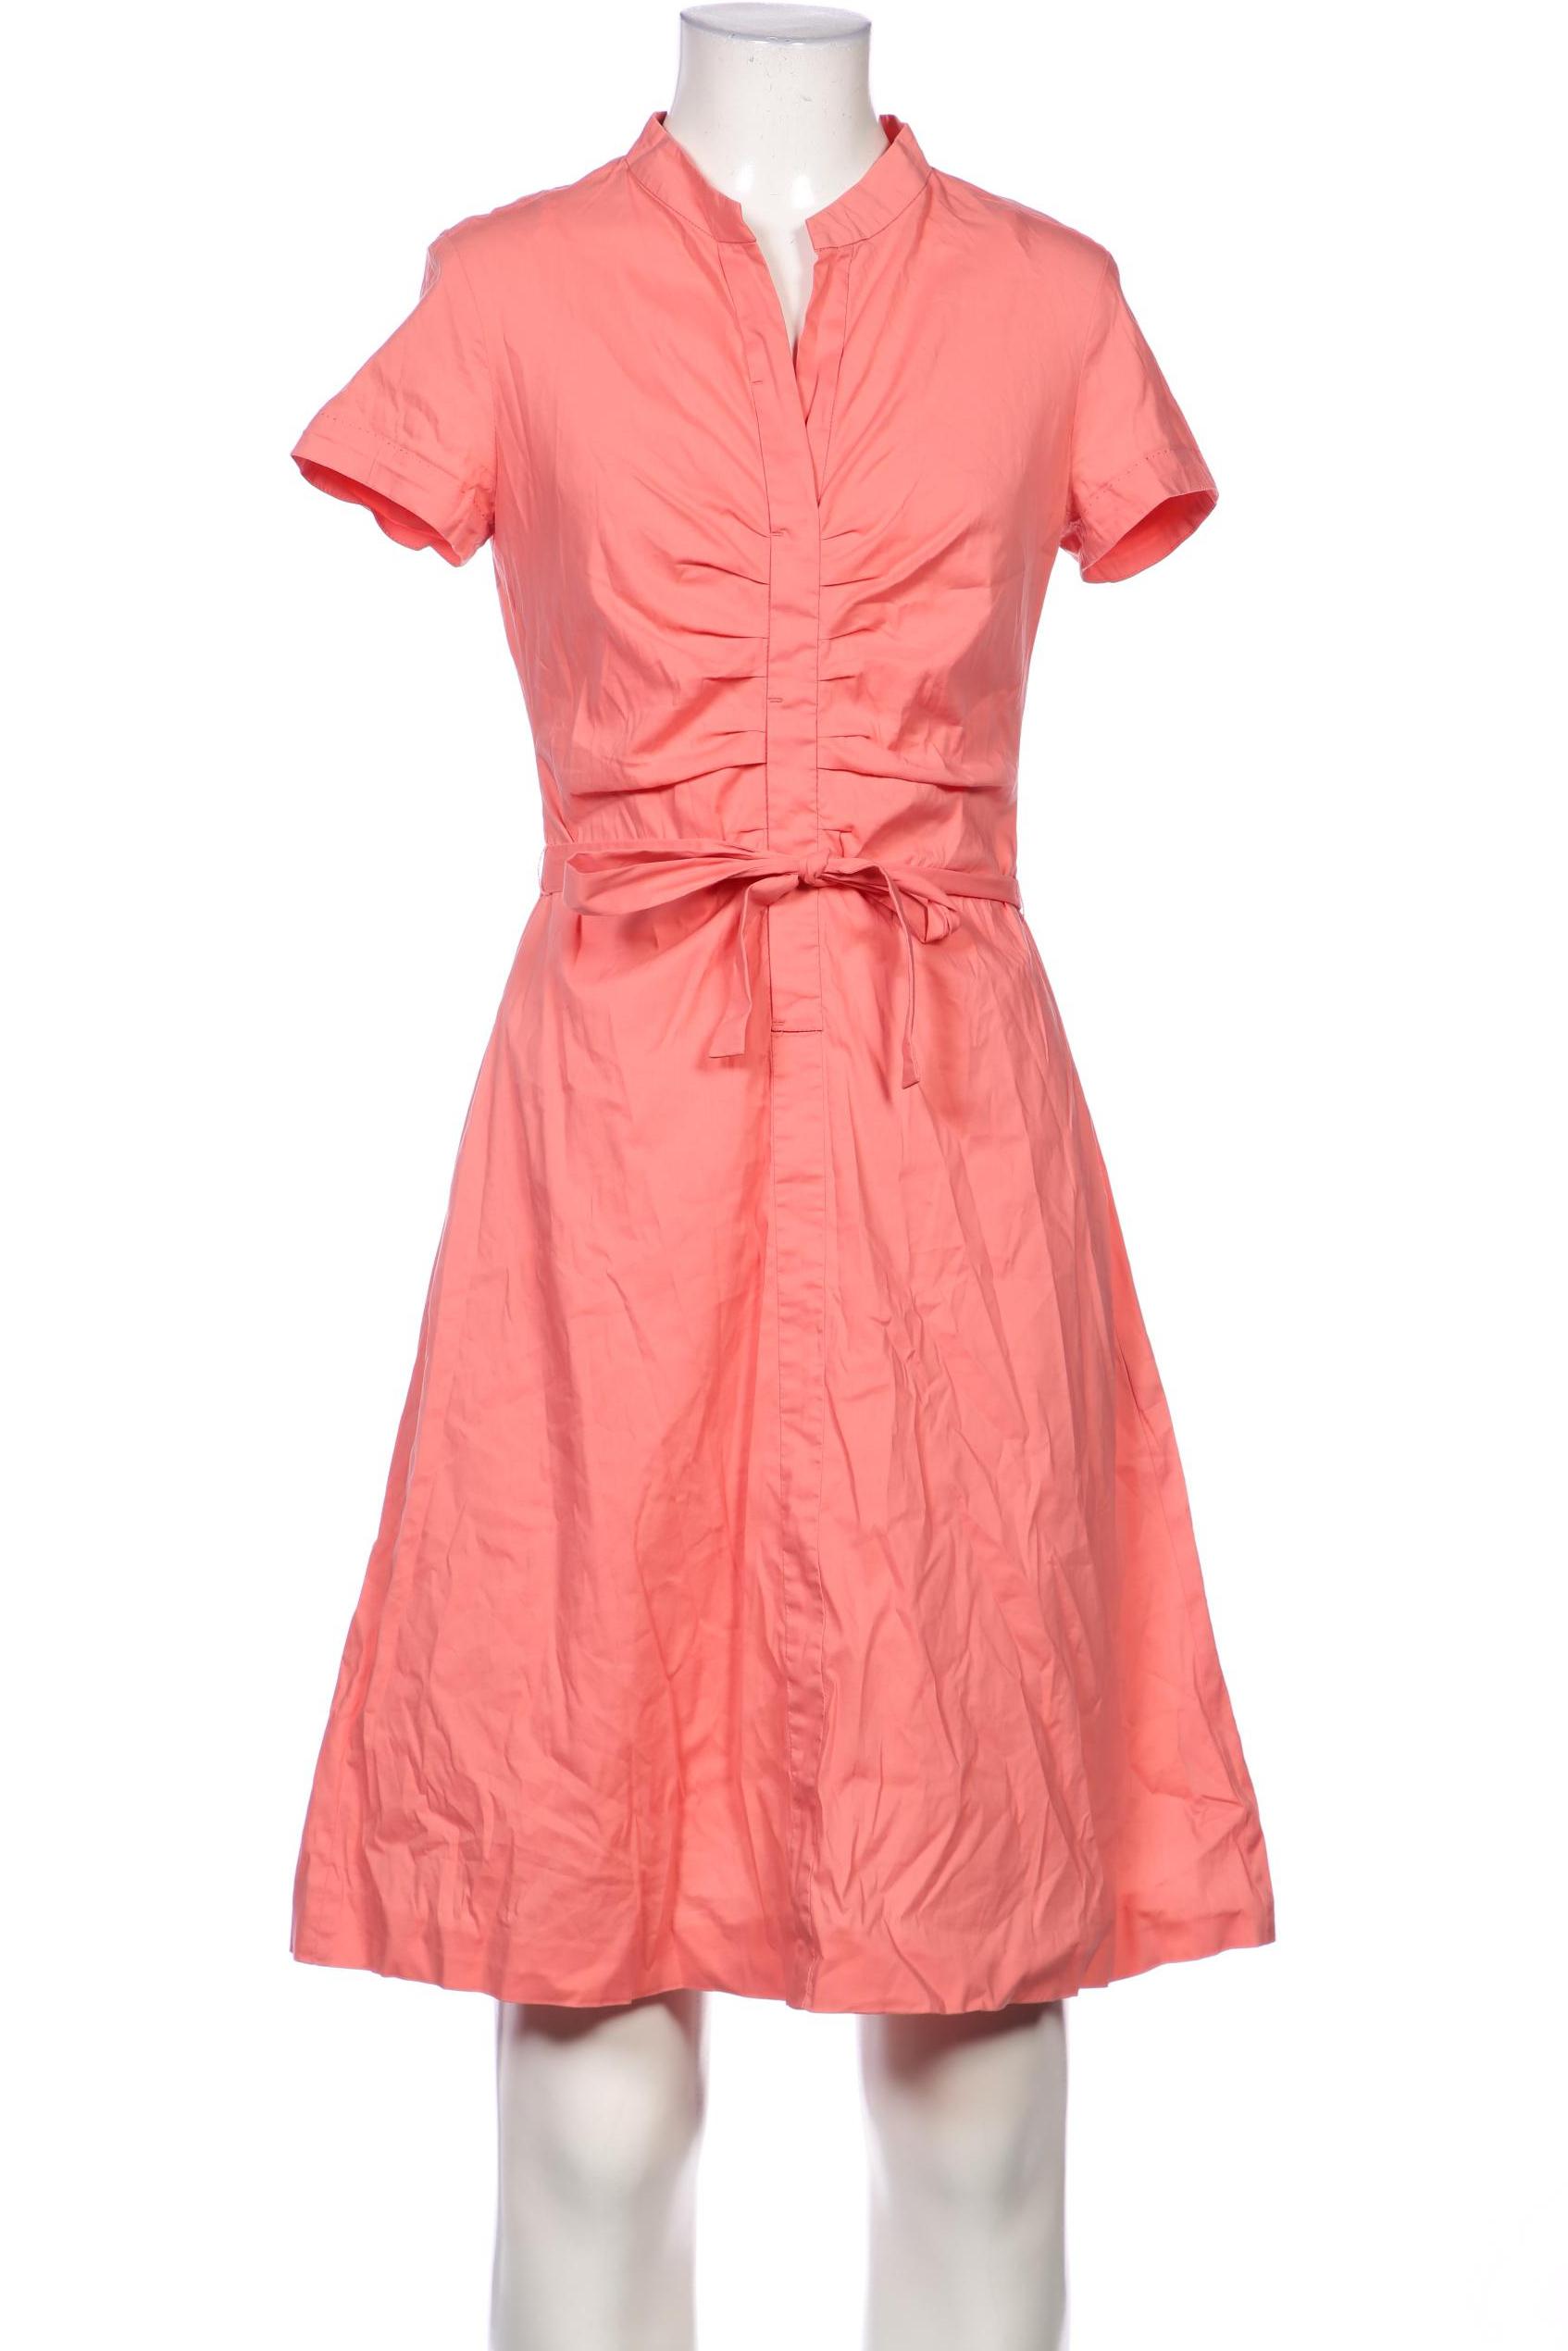 RENE LEZARD Damen Kleid, pink von RENE LEZARD